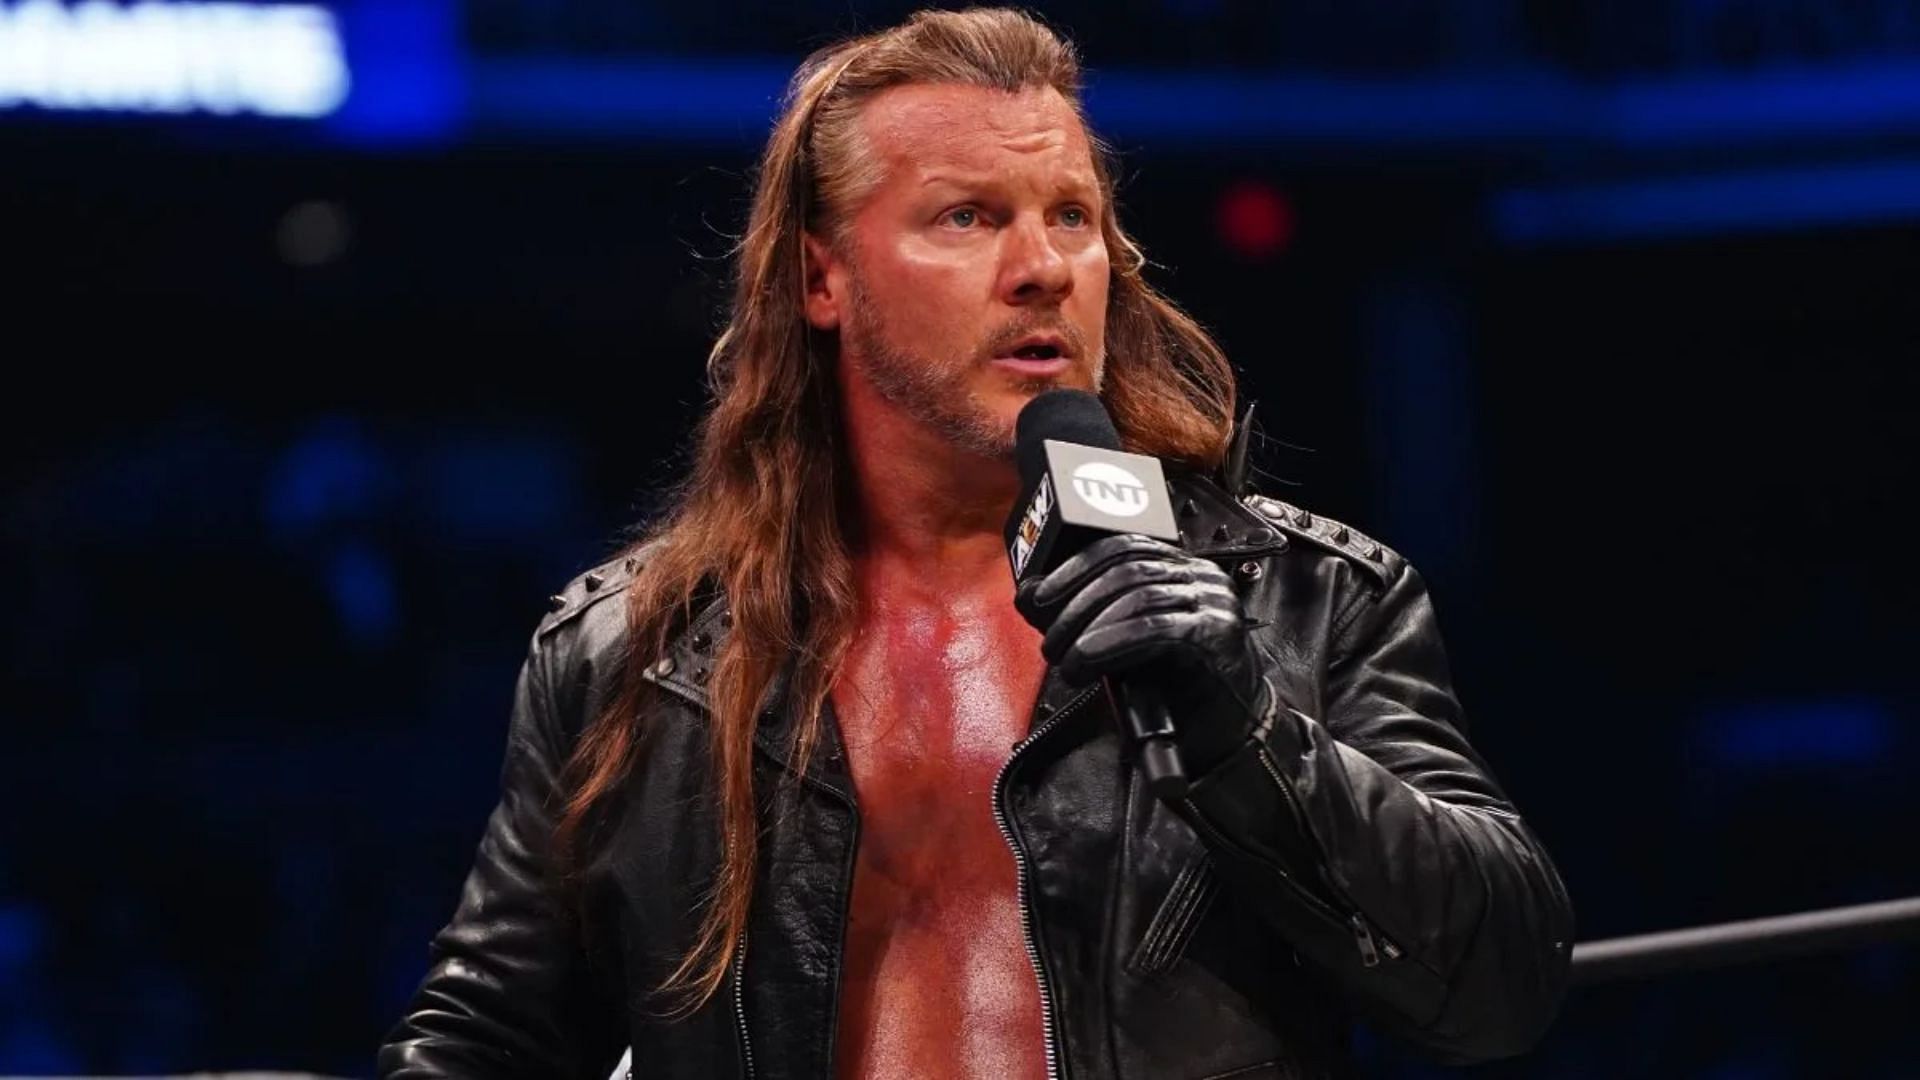 Chris Jericho is a former WWE Champion